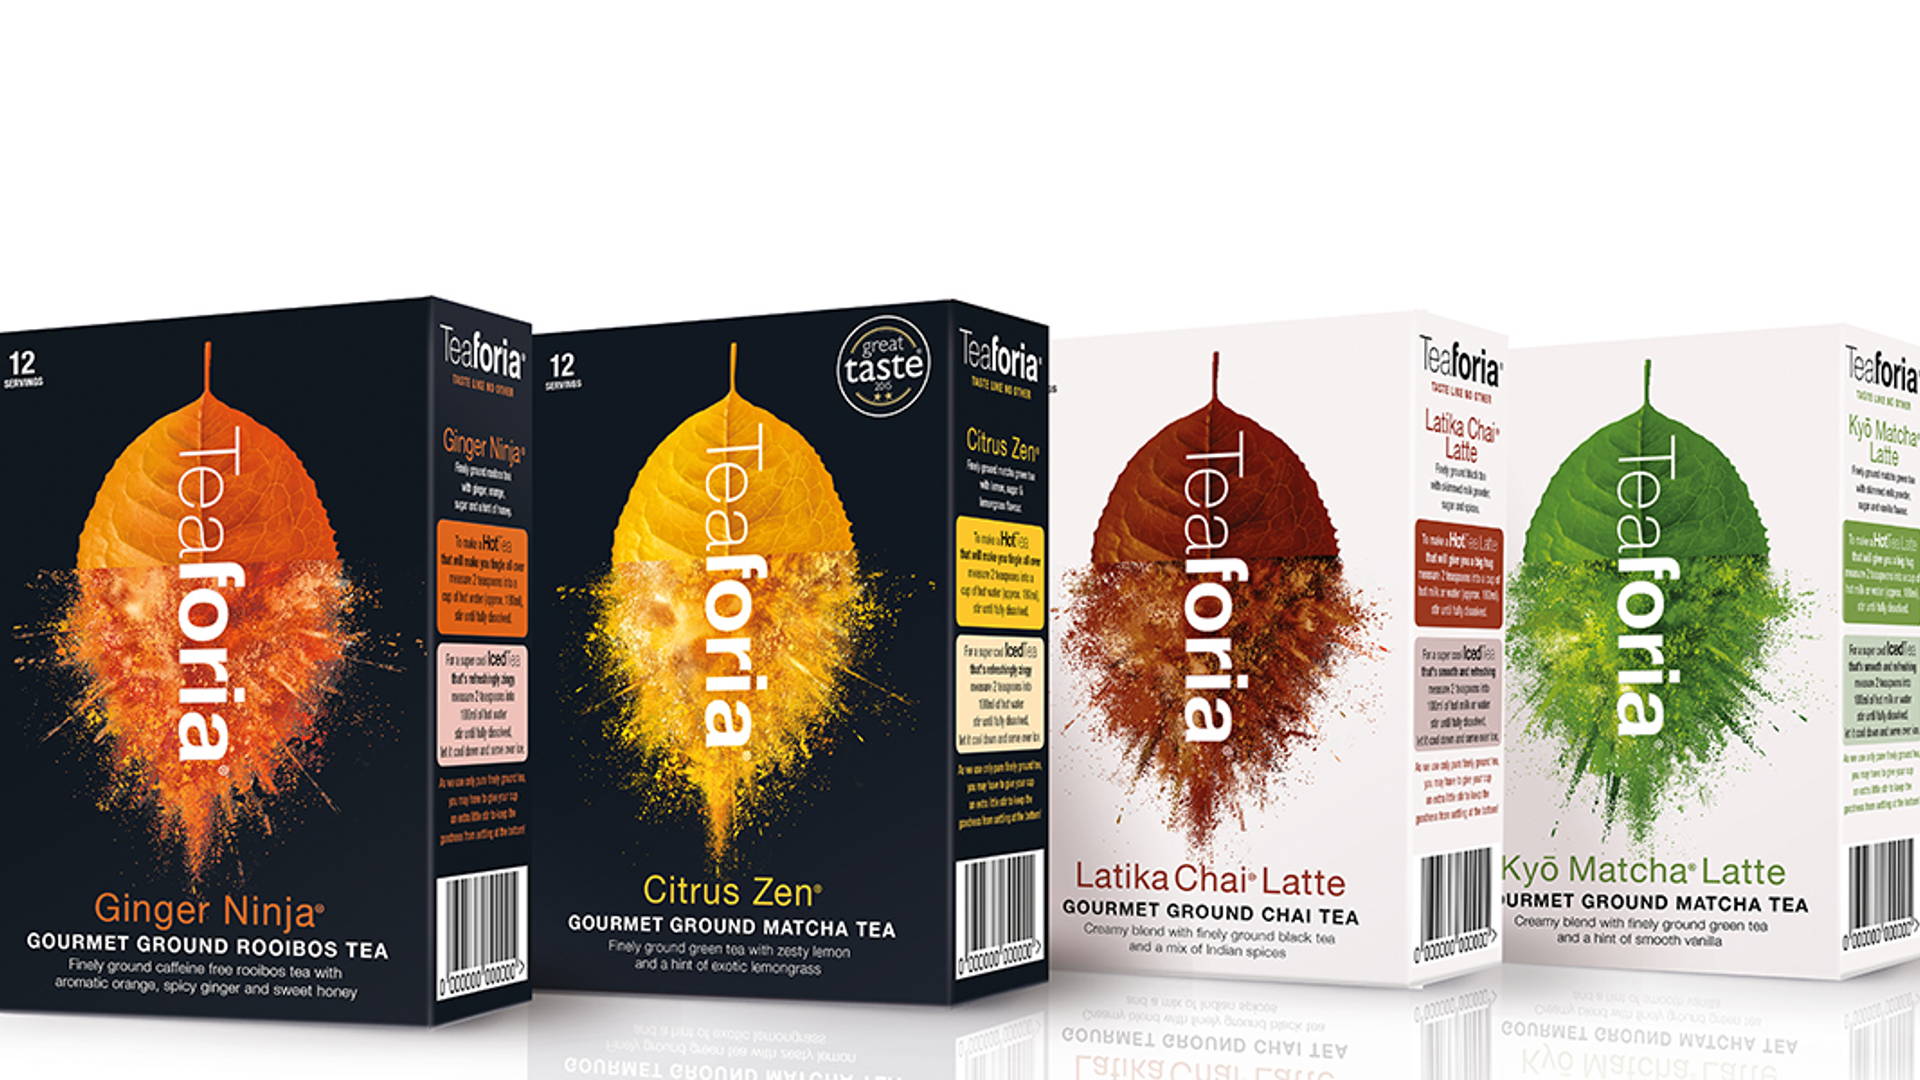 Teaforia | Dieline - Design, Branding & Packaging Inspiration